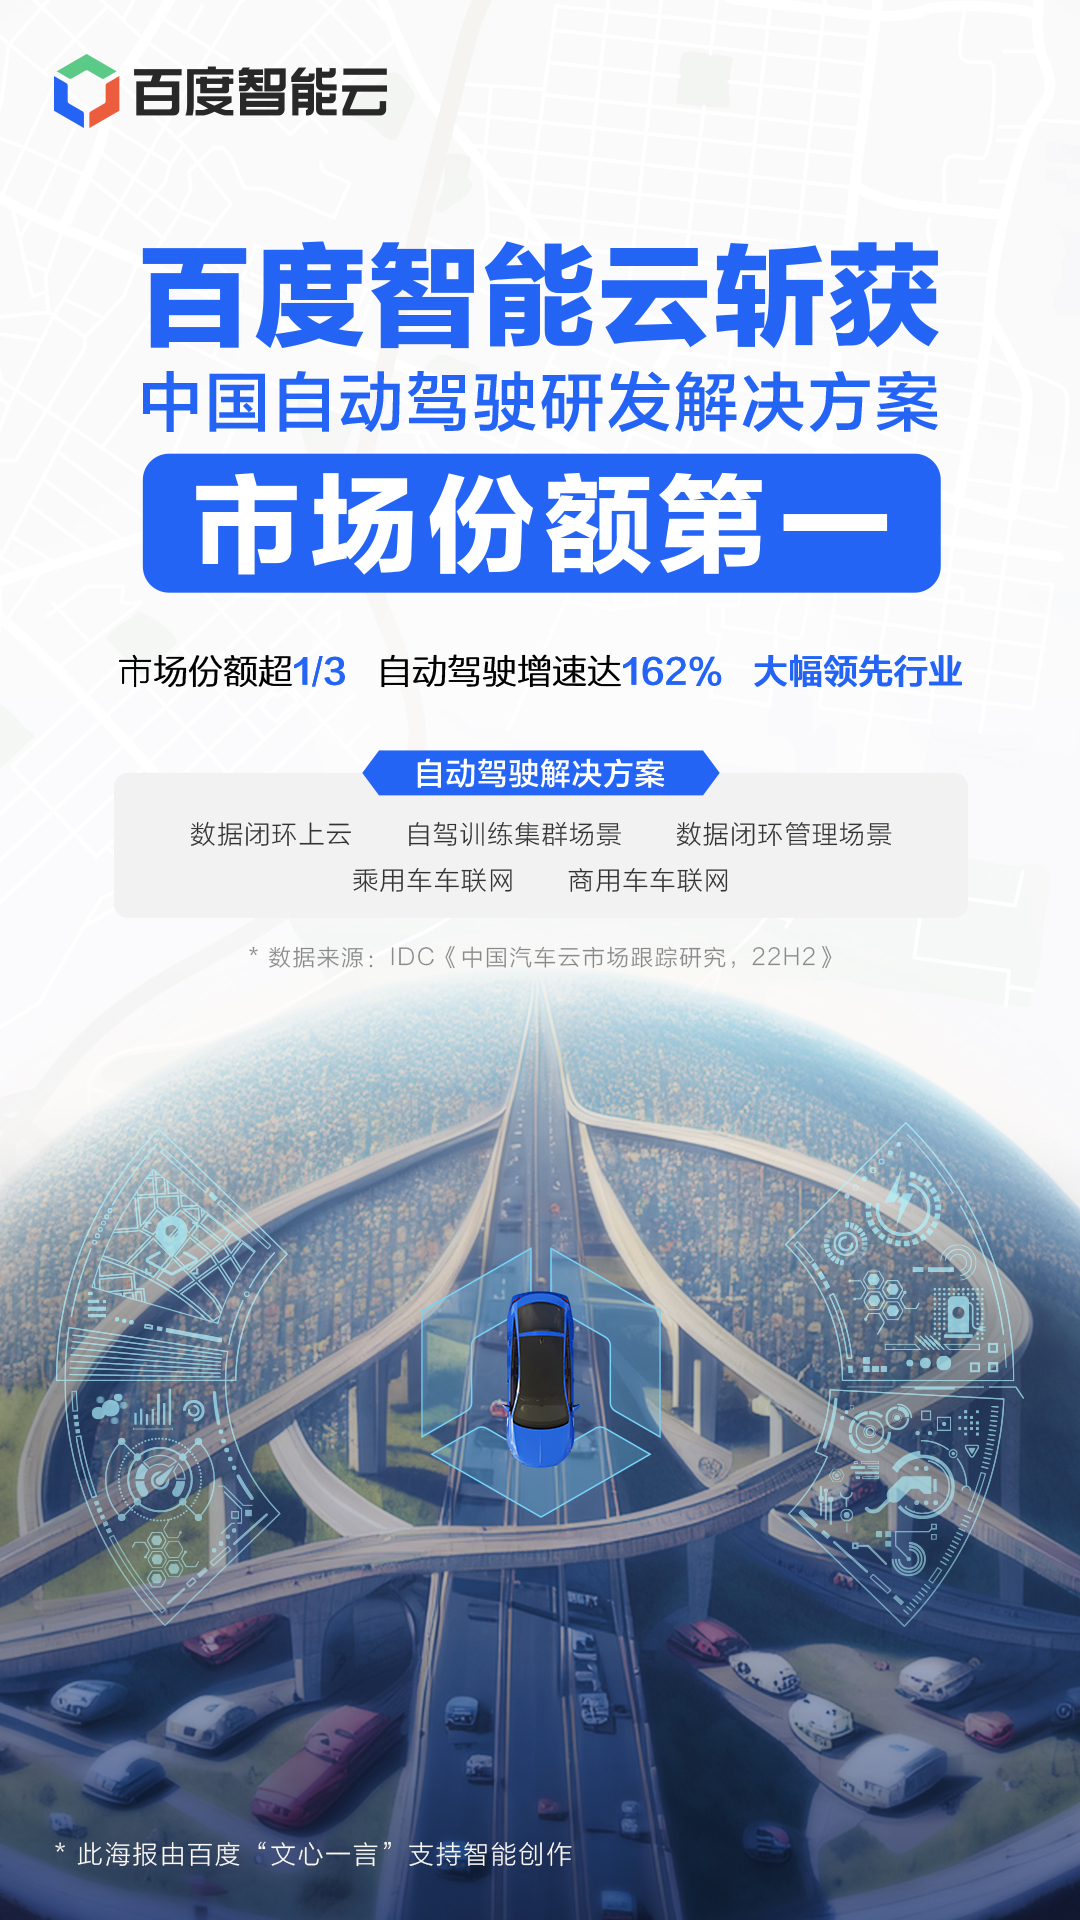 IDC:自动驾驶研发解决方案,百度智能云市场份额第一!